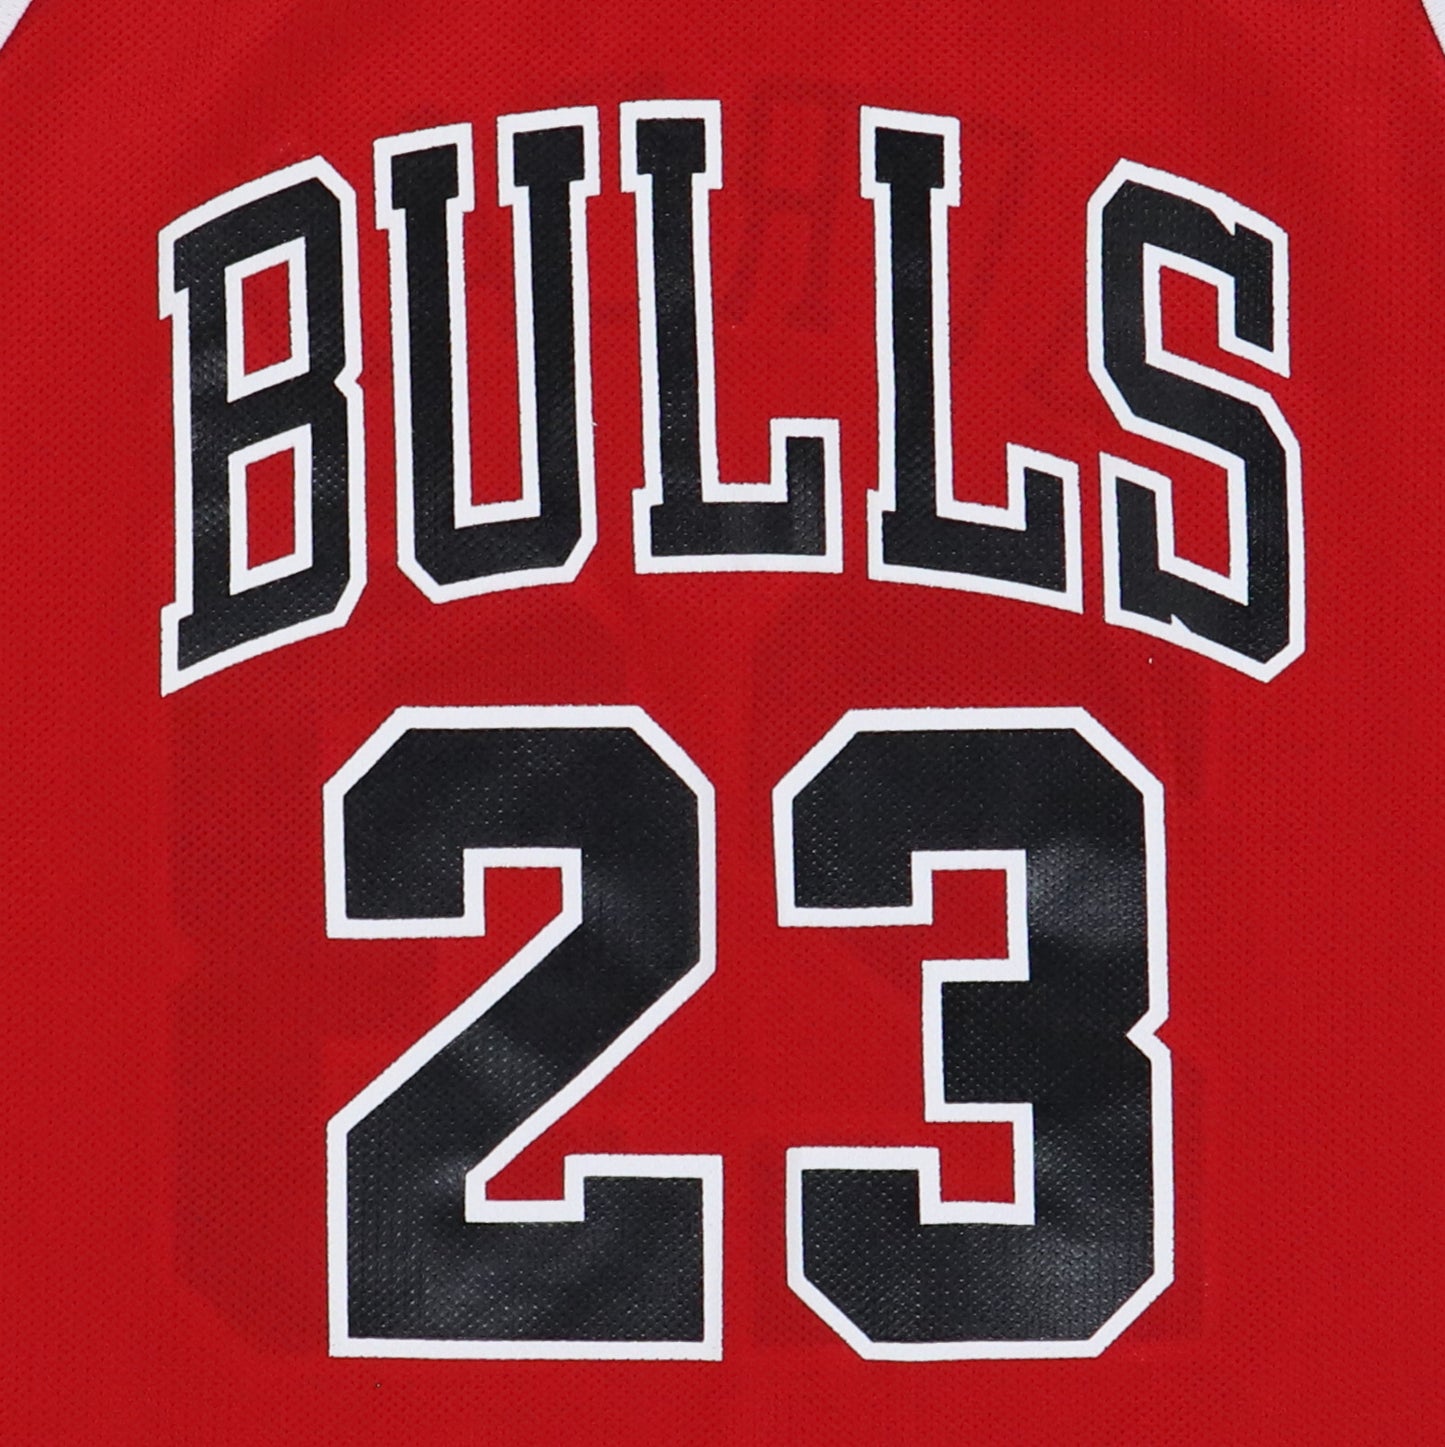 Vintage 90's CHAMPION NBA Chicago Bulls Jordan 23 Jersey Red Medium